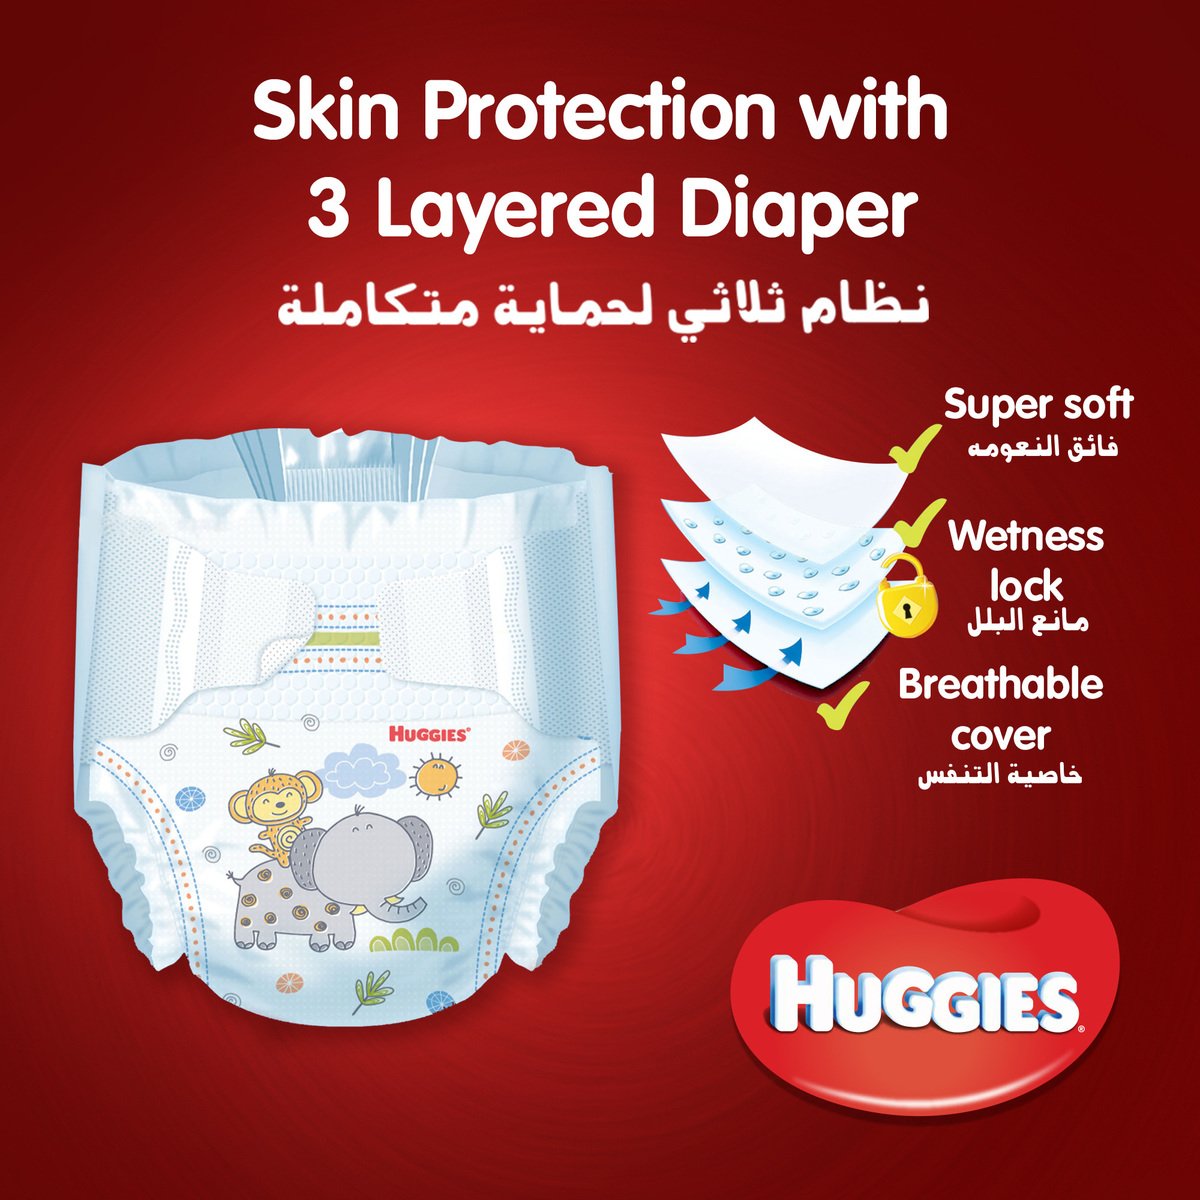 Huggies Diaper Size 4, Large 7-18kg 46pcs